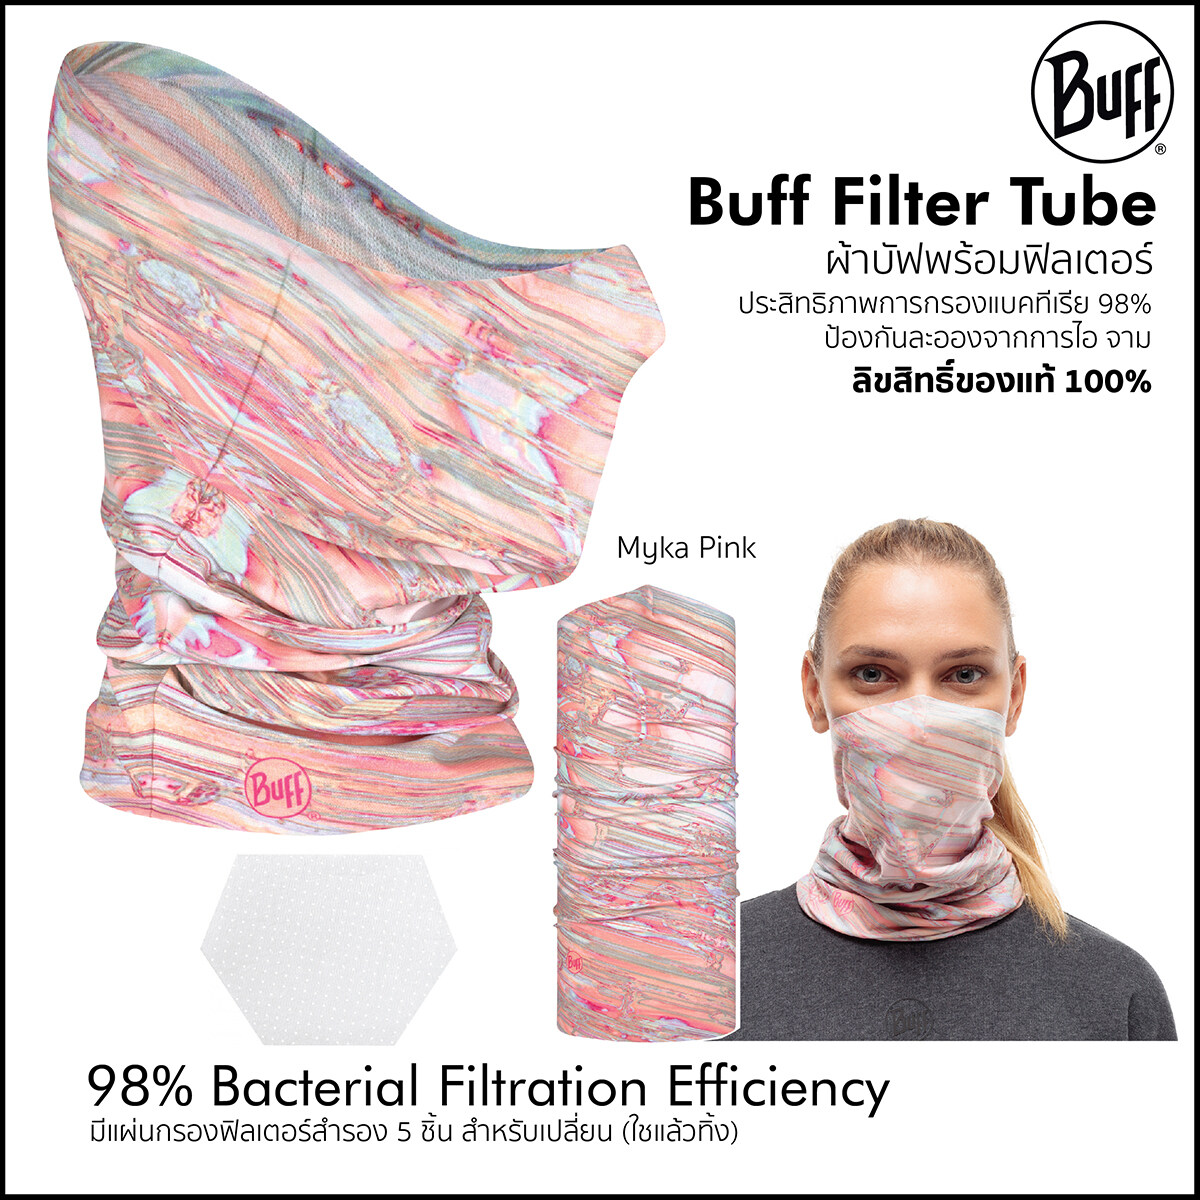 Buff Filter Tube ไซส์ M/L ผ้าบัฟมีช่องใส่แผ่นกรองฟิลเตอร์ (ฟิลเตอร์สำรอง 5 ชิ้น) ผ้านุ่ม ใส่สบายใช้งานได้ทังวั้น ลิขสิทธิ์ของแท้จากสเปน